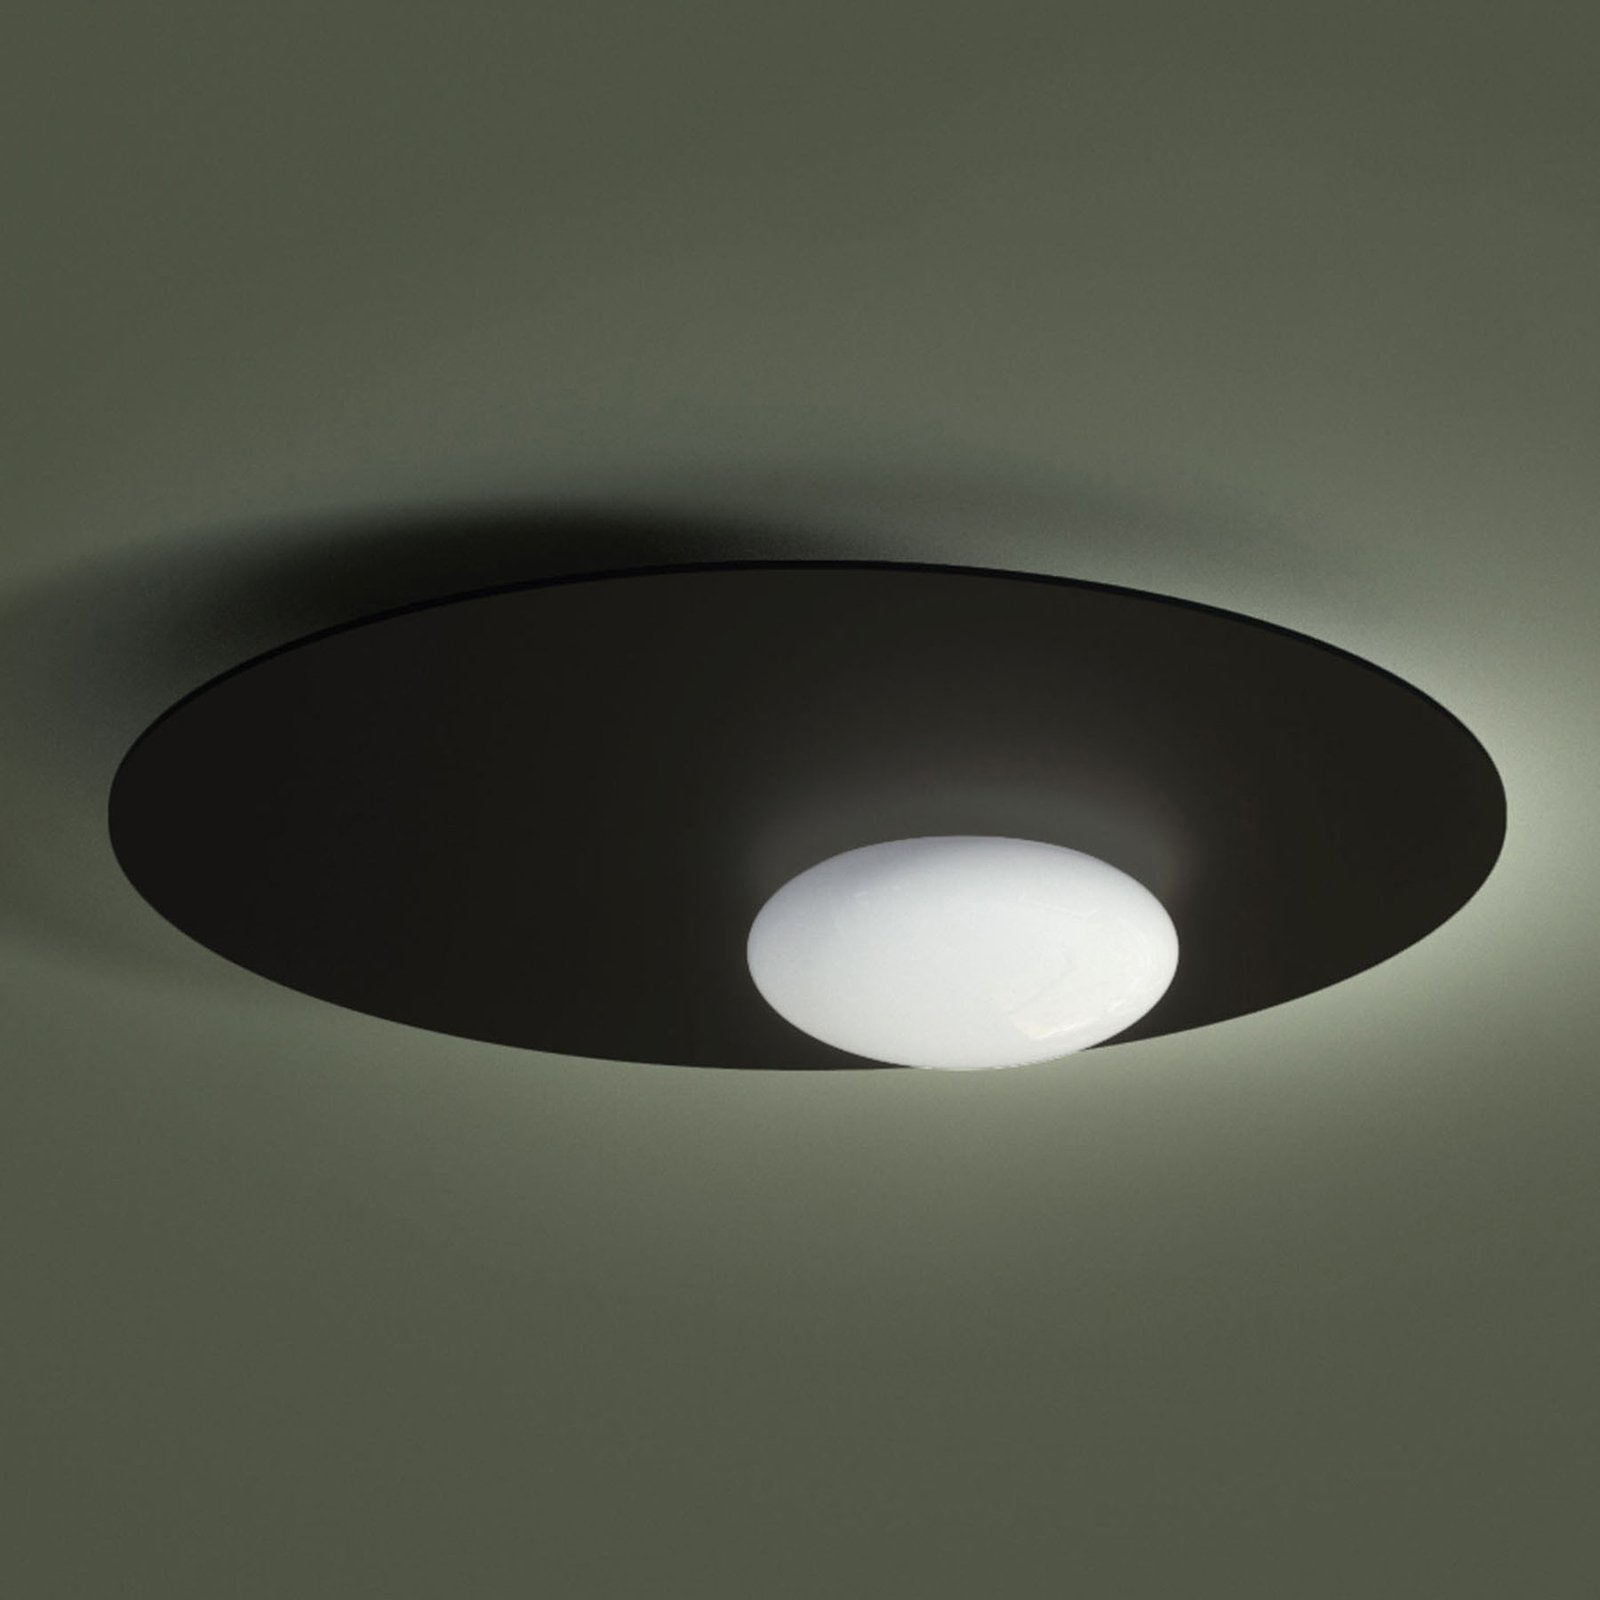 Axolight Kwic plafonnier LED, noir Ø48 cm